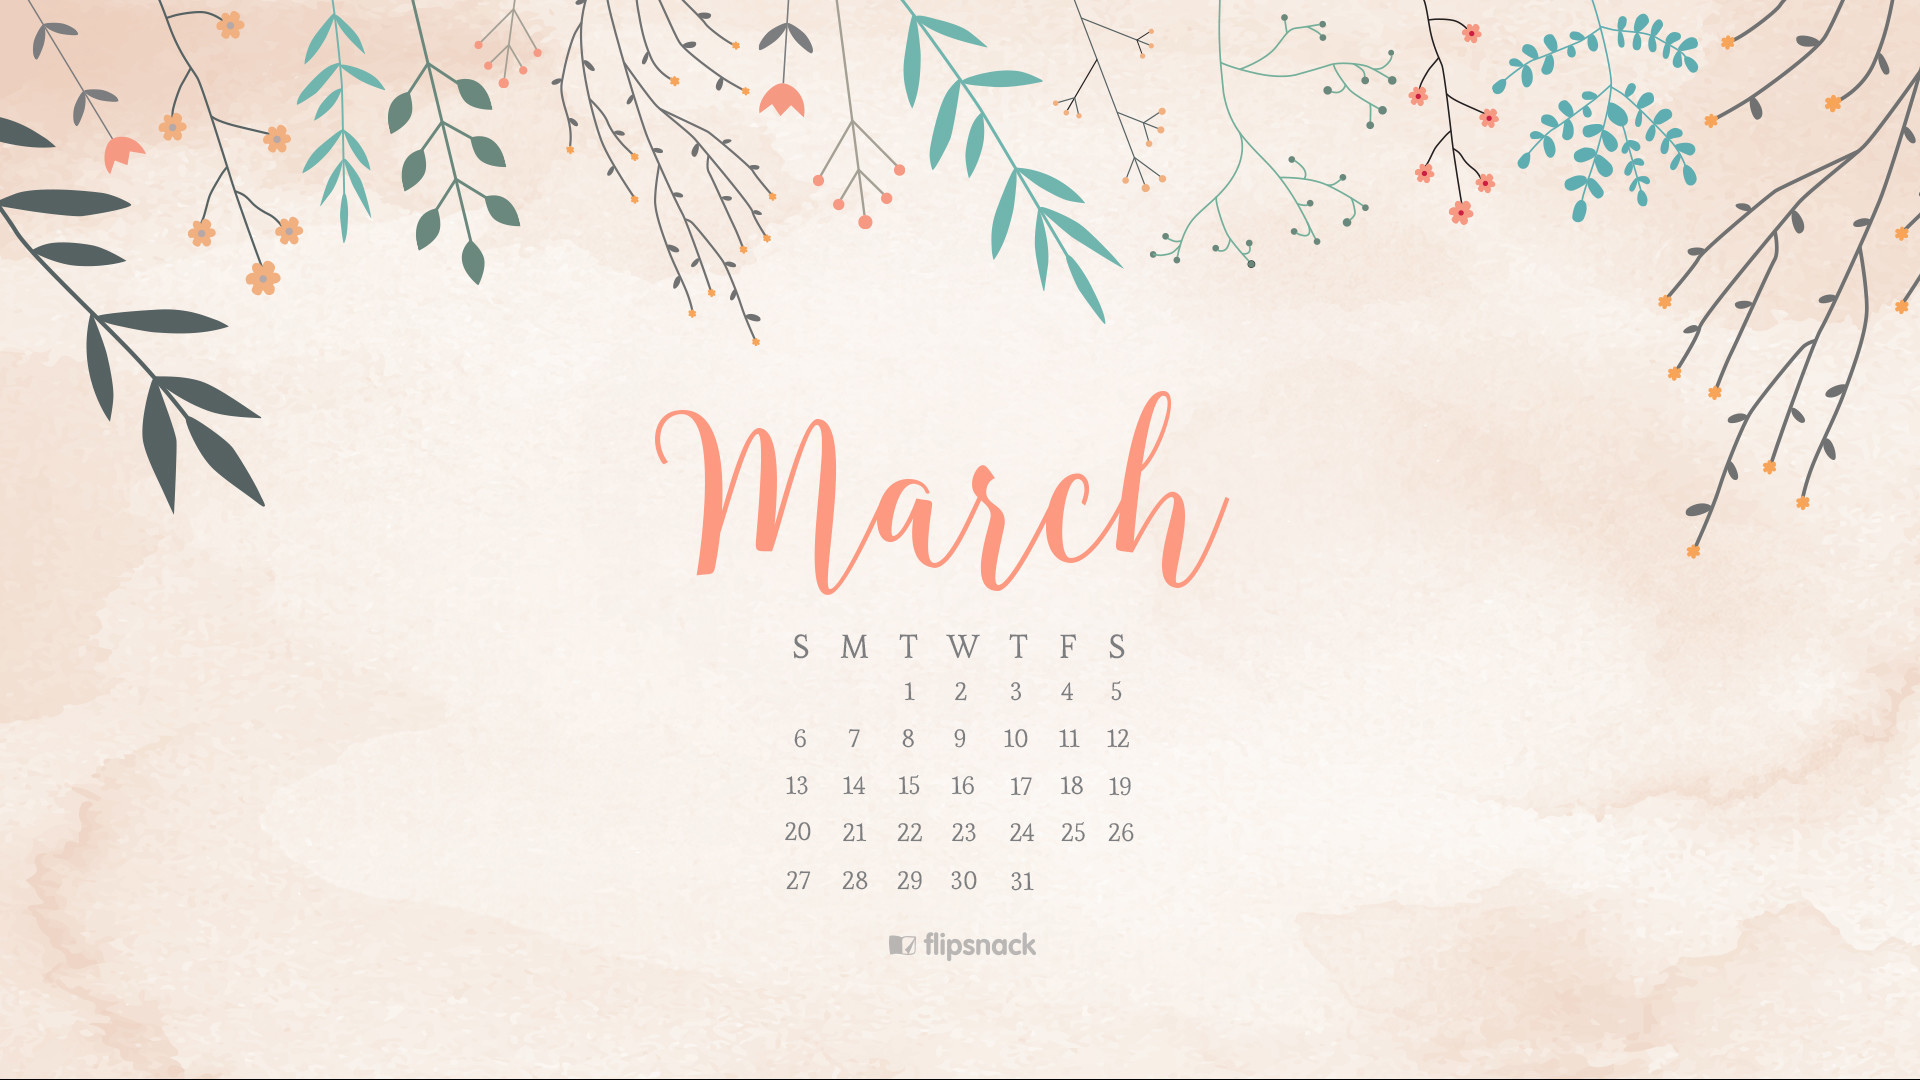 1920x1080 Desktop Wallpaper Calendar 2018 59 images 